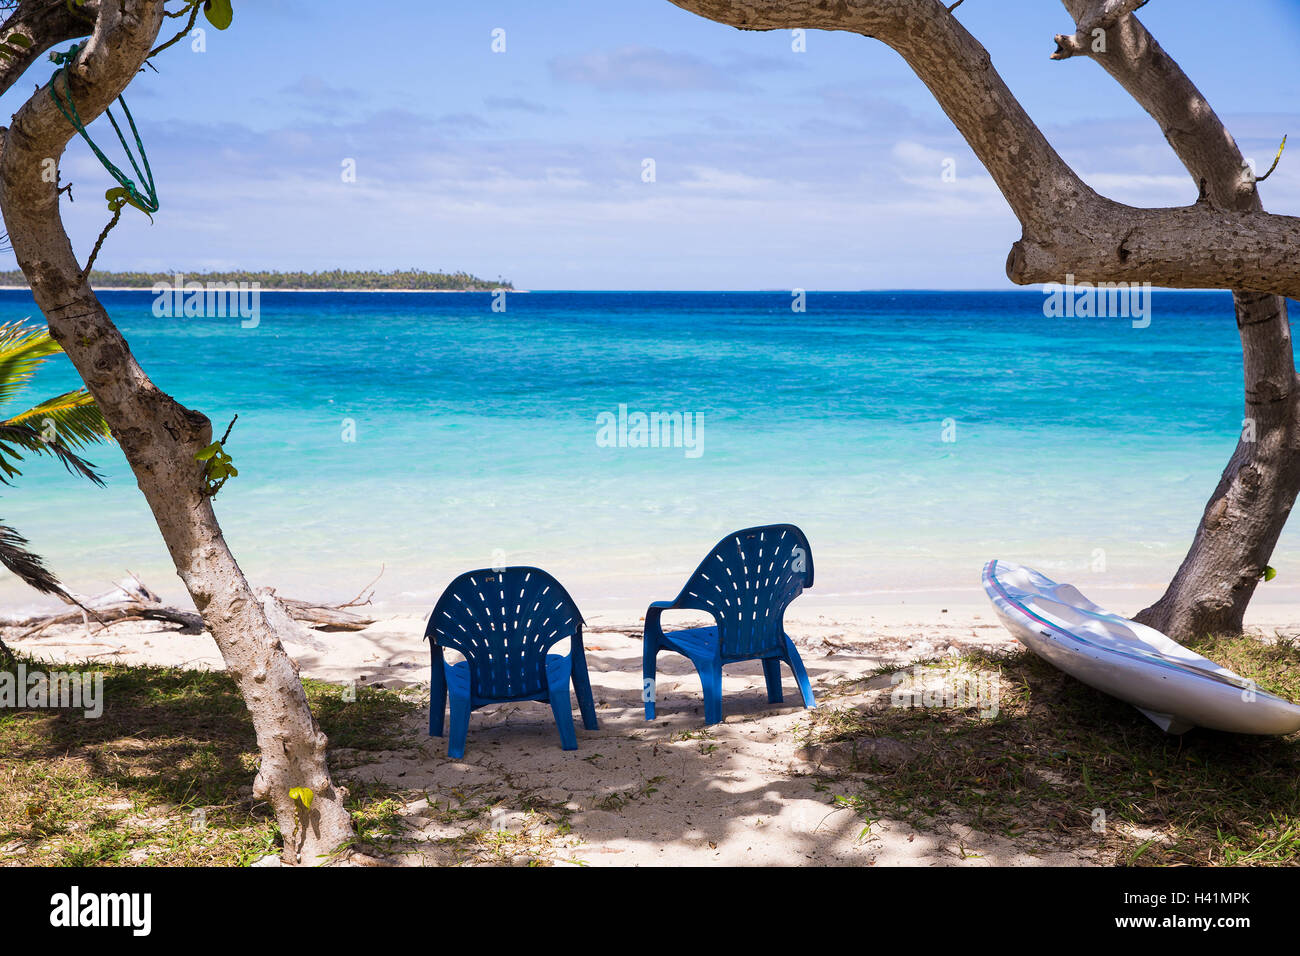 Two plastic chairs on the beach, Tonga Stock Photo